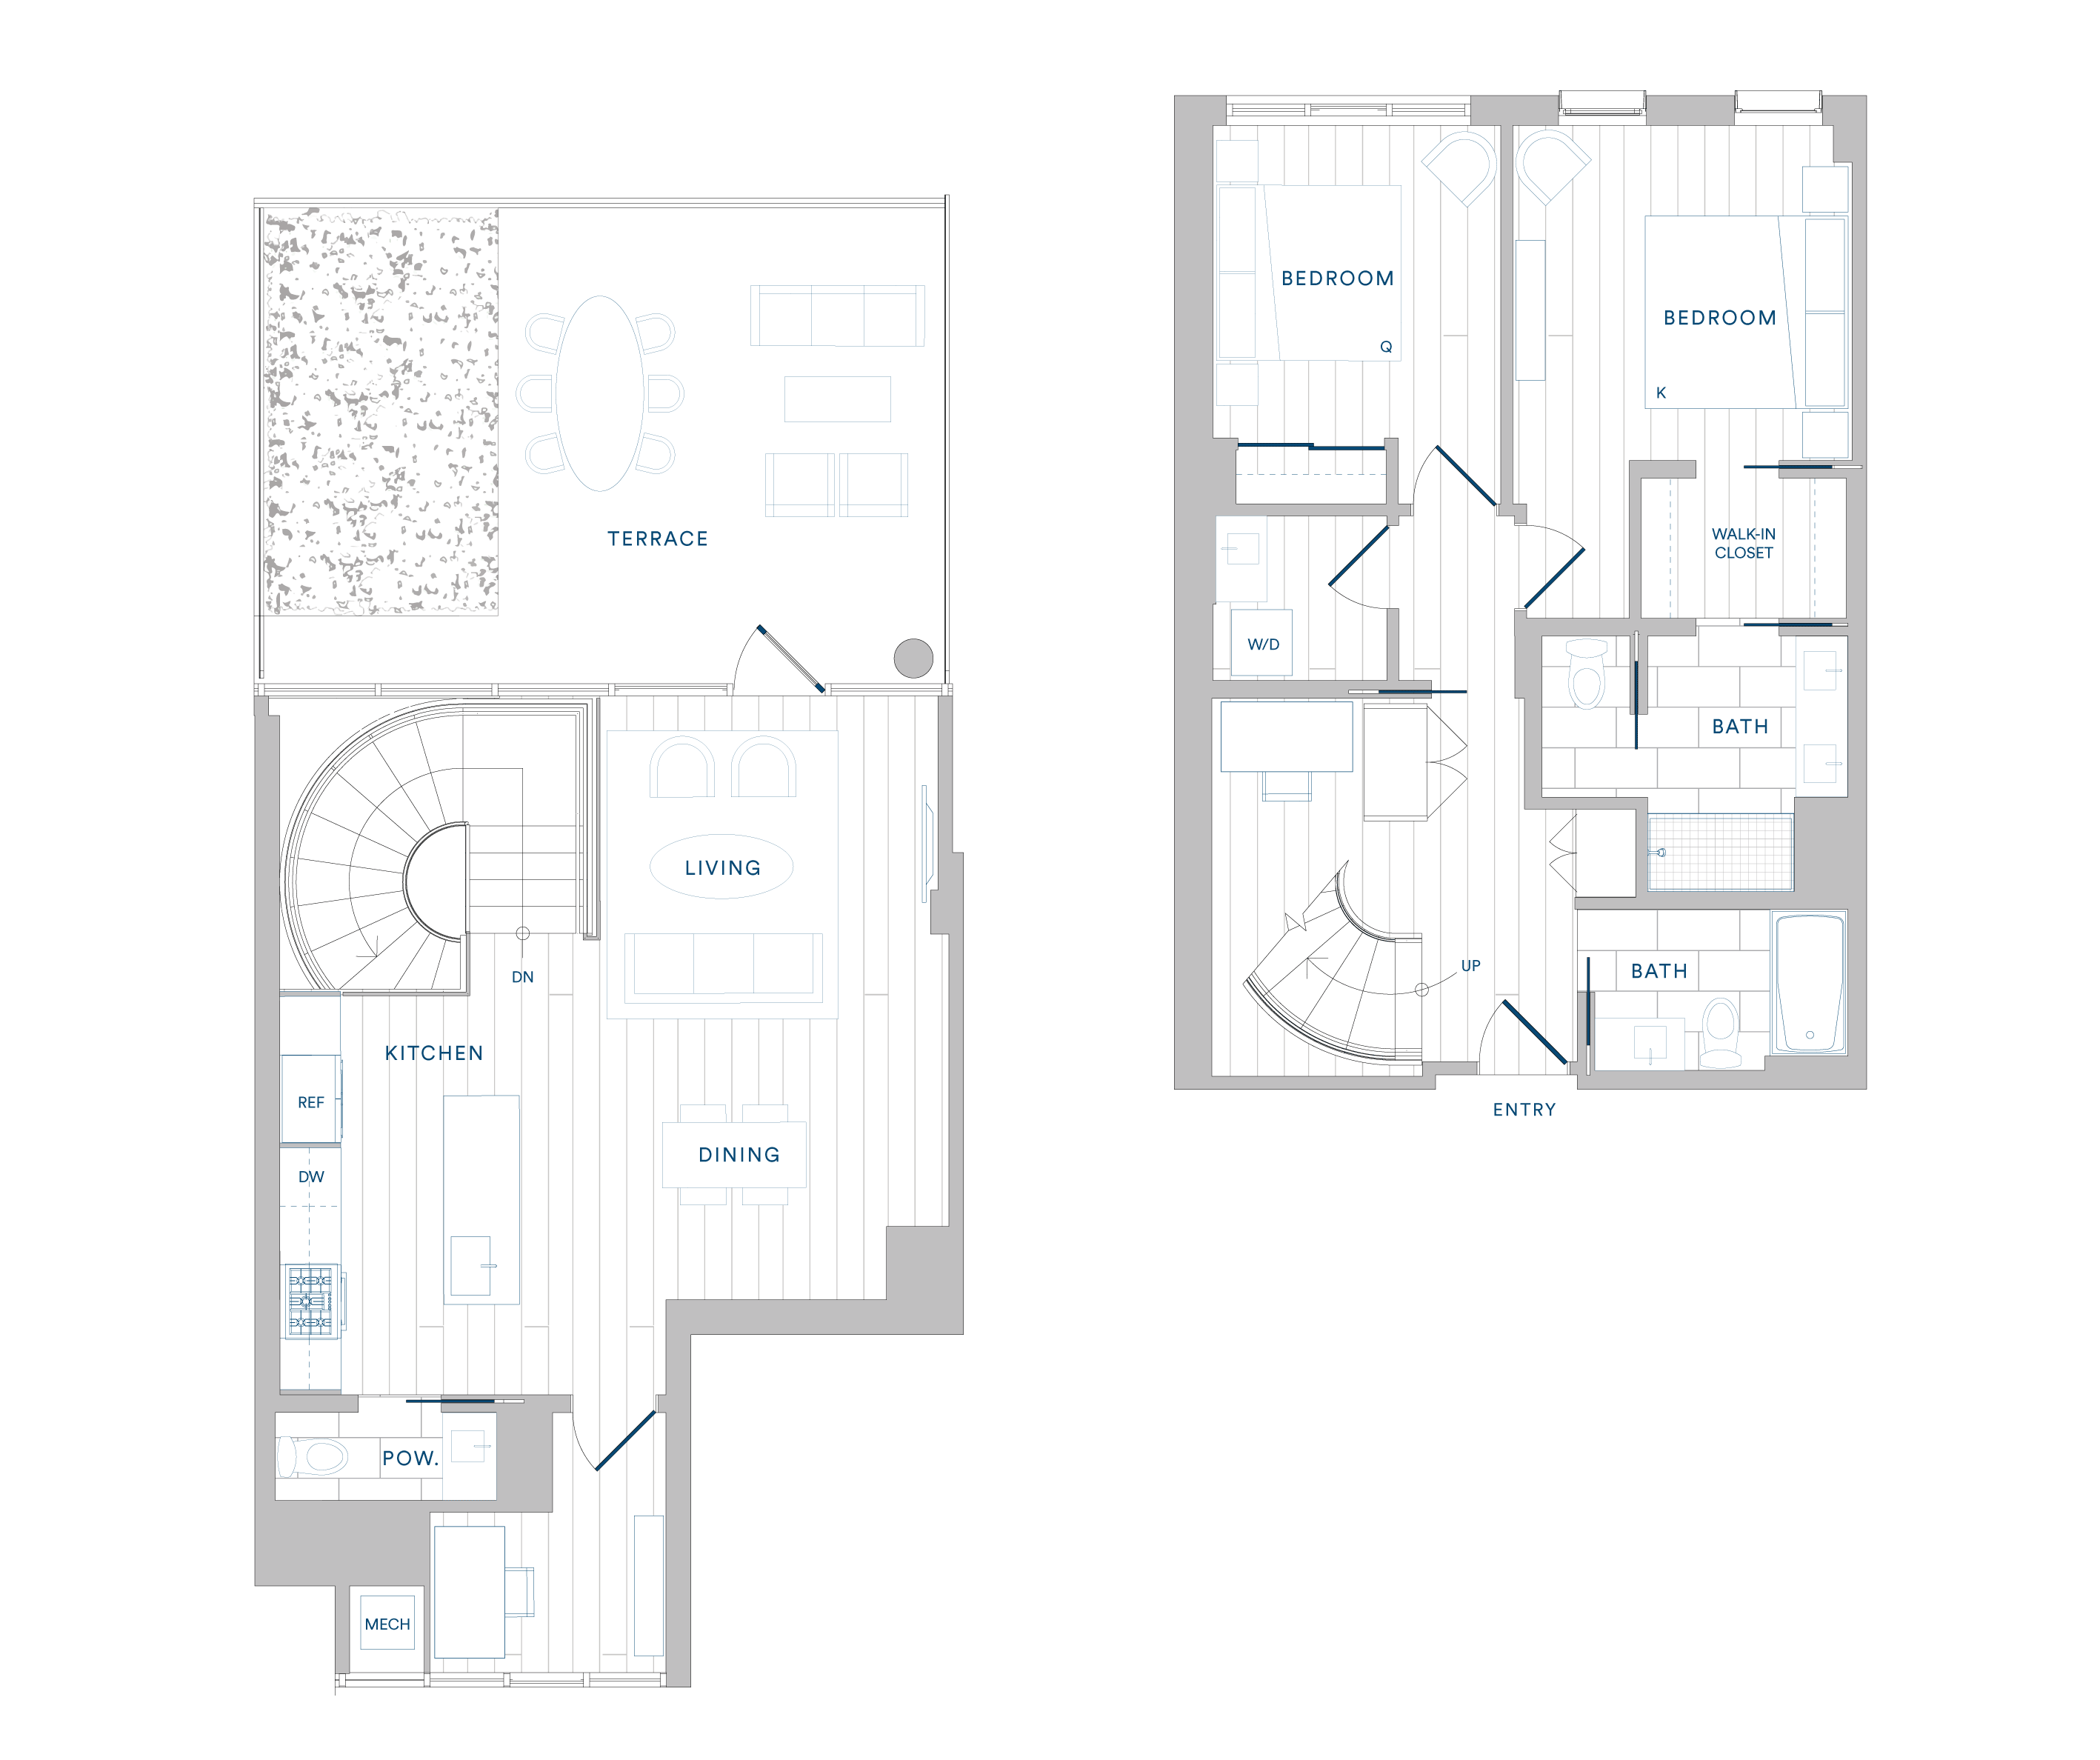 Floorplan for Apartment #1307, 2 bedroom unit at Margarite